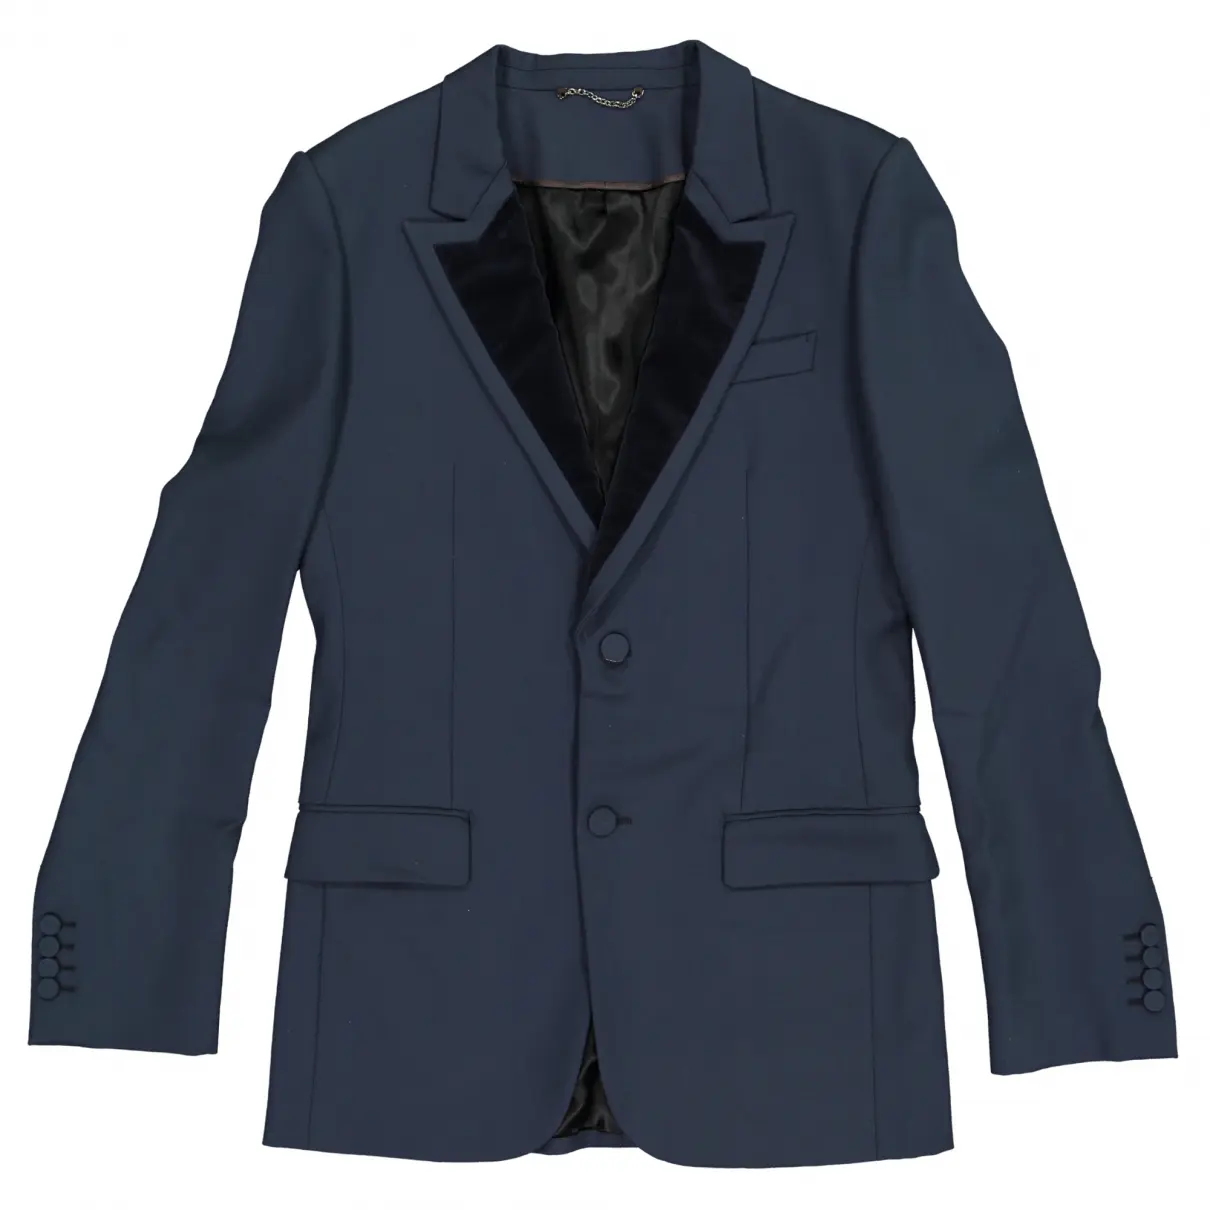 Buy Louis Vuitton Wool suit online